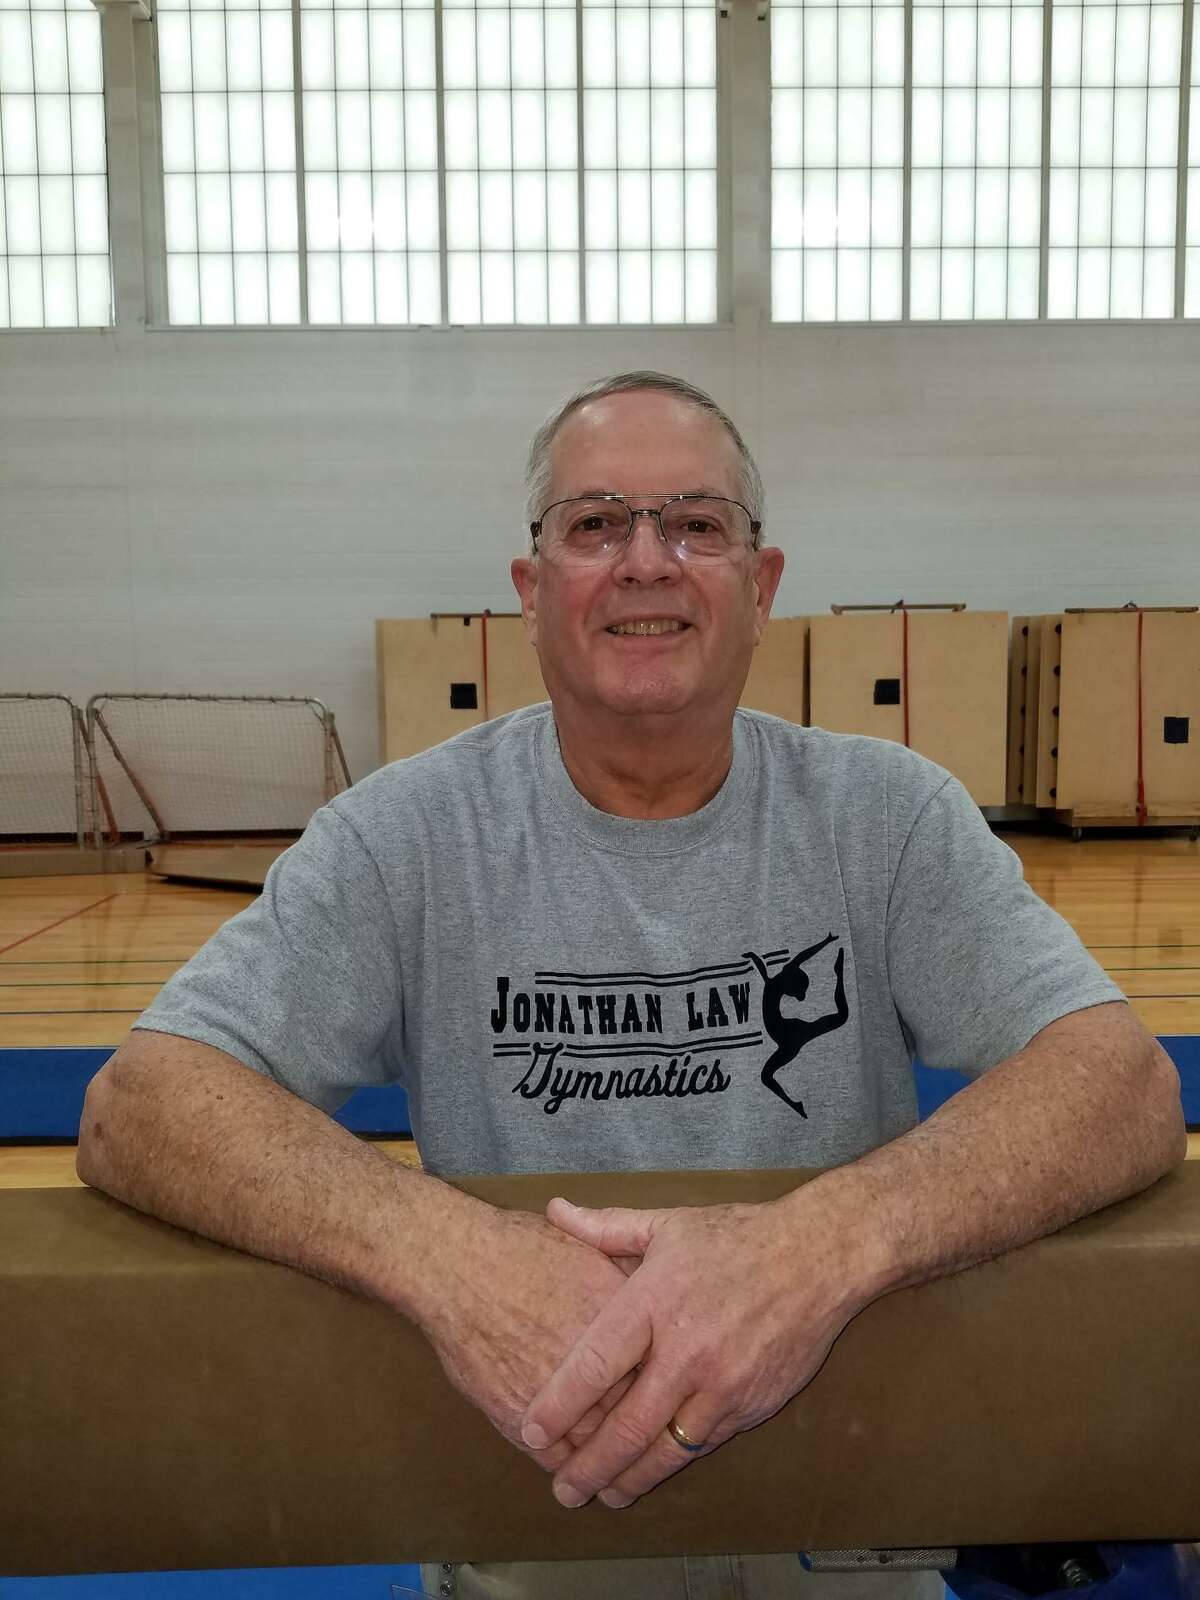 Pat Simon has guided Jonathan Law gymnastics since the program began in 1978.